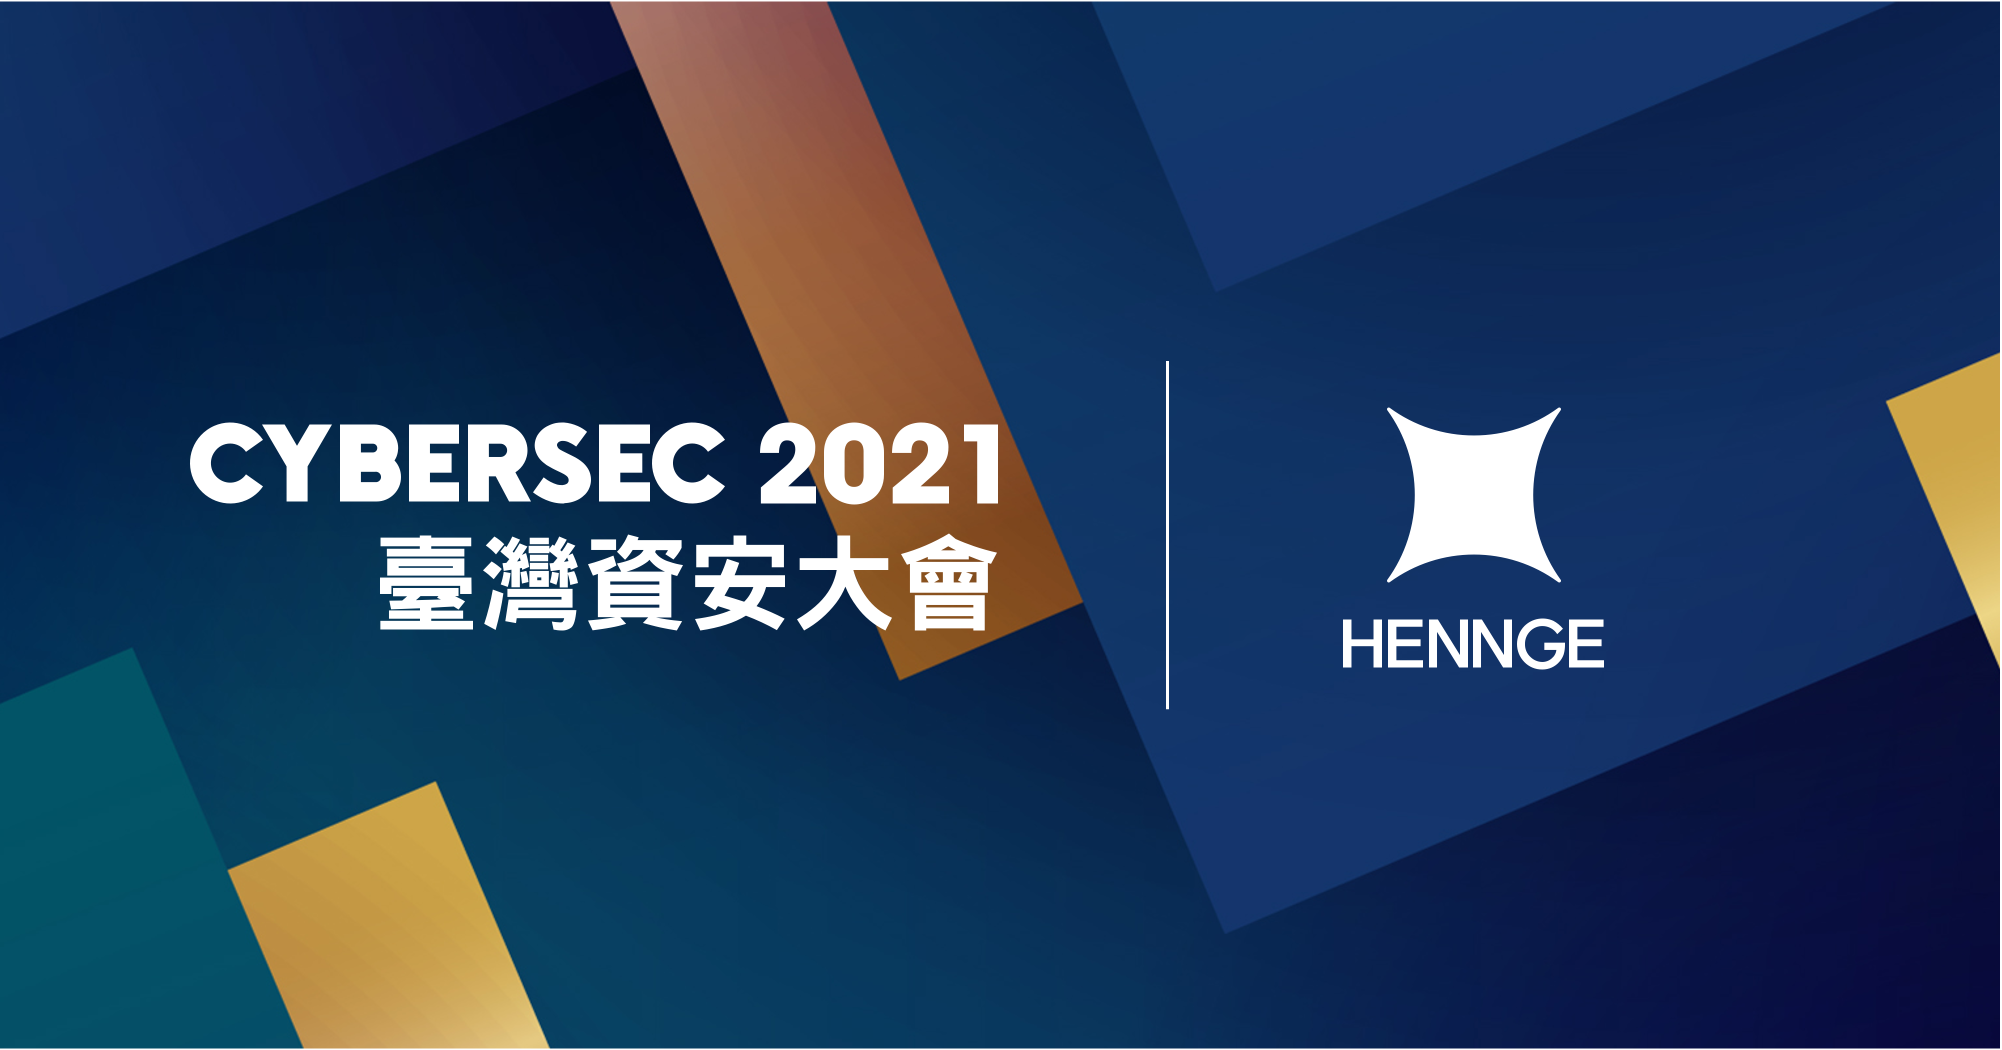 HENNGE 將以白金級贊助商參加 2021 臺灣資安大會